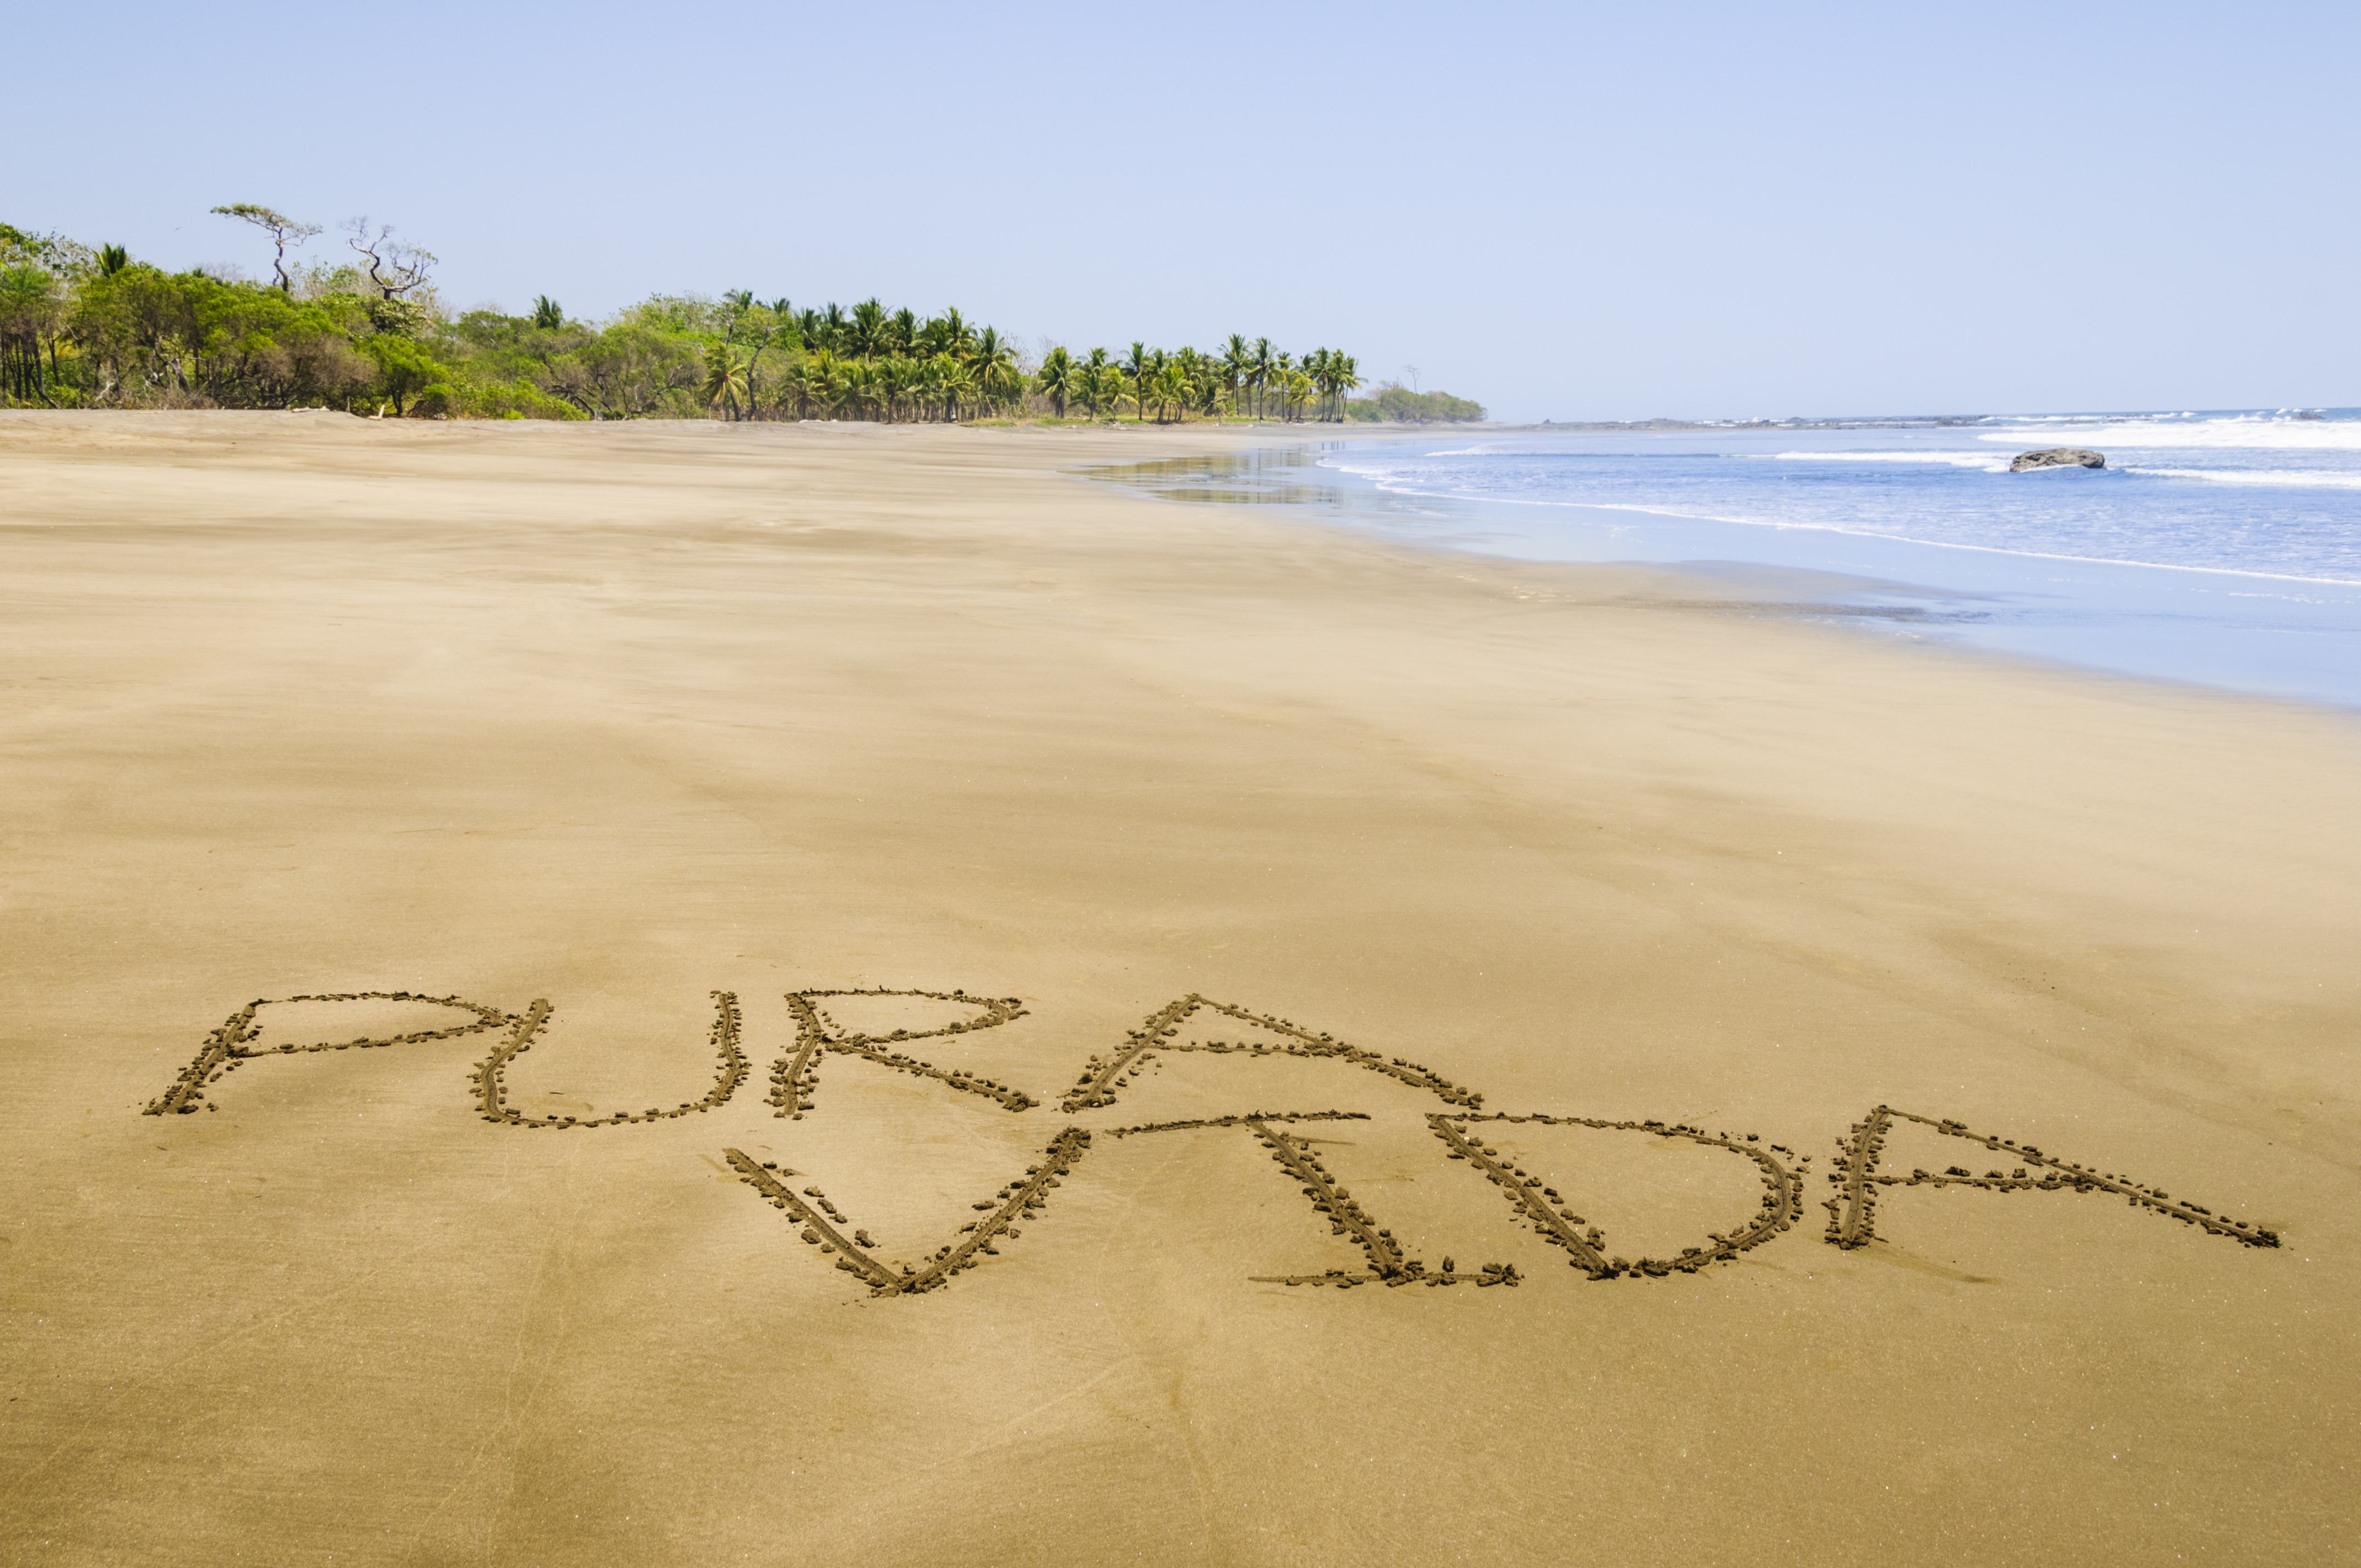 The words Pura Vida are written in sand on Cocos beach in Guanacaste province Costa Rica.